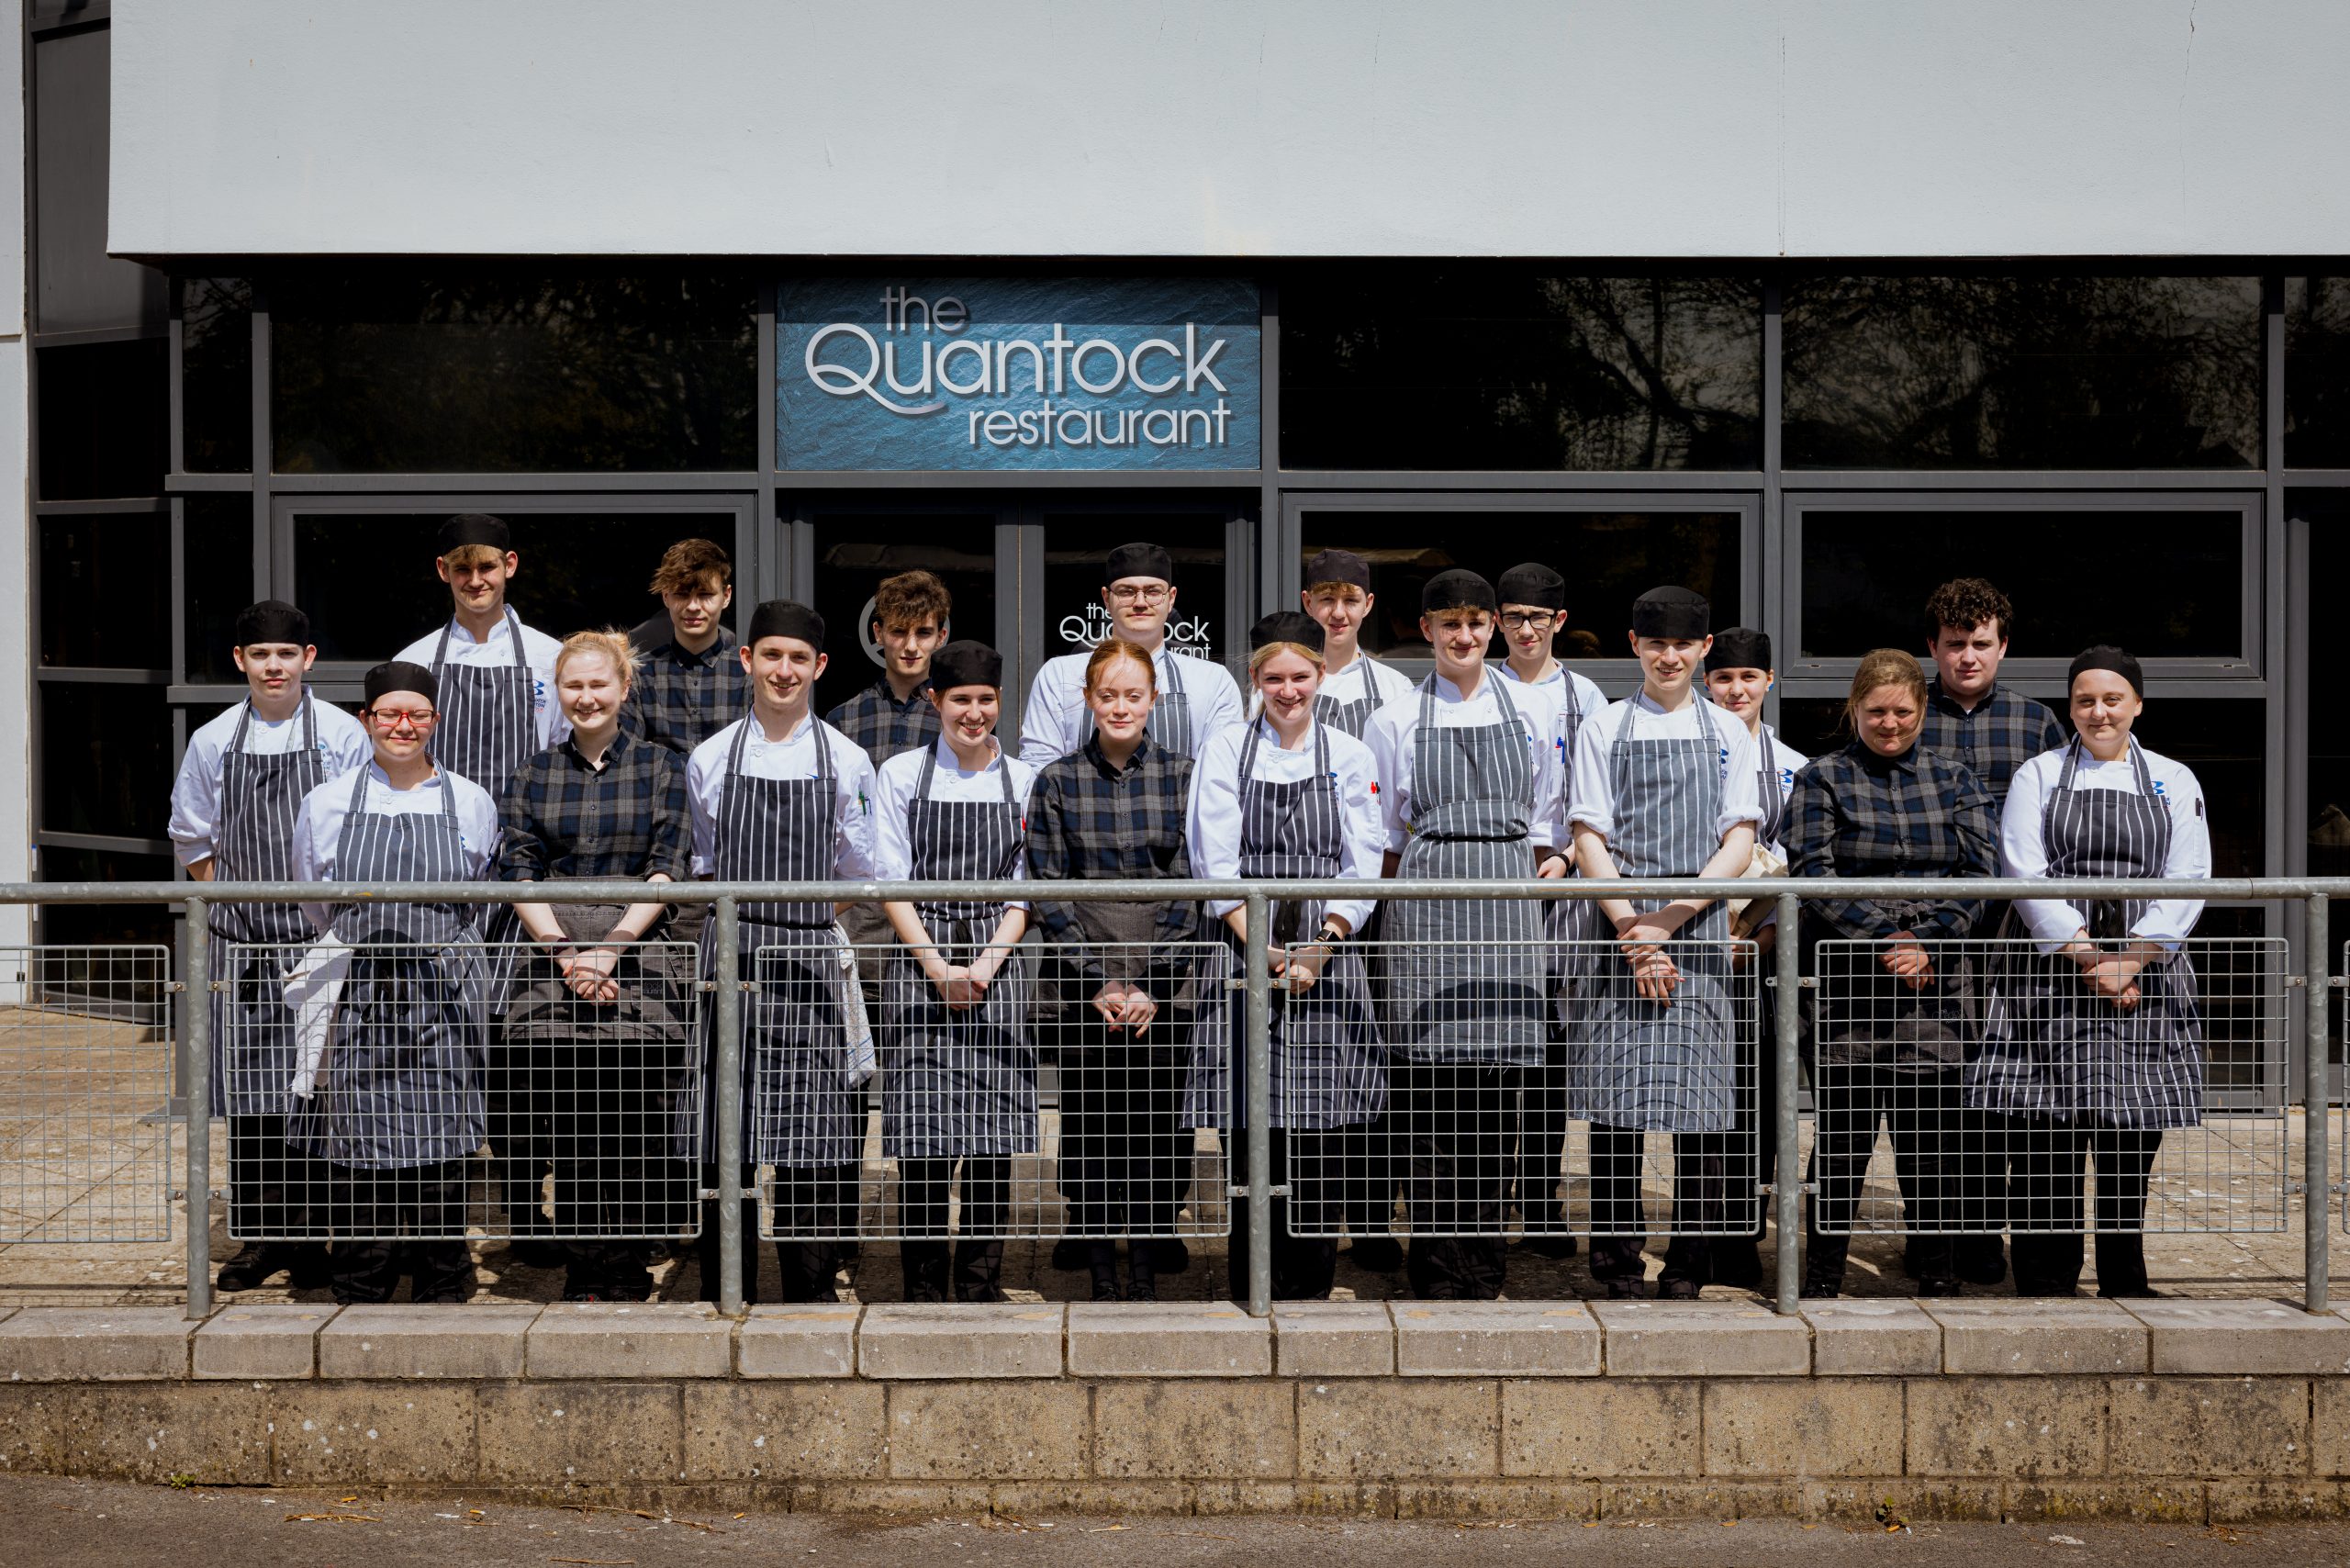 The Quantock Restaurant Students outside the restaurant